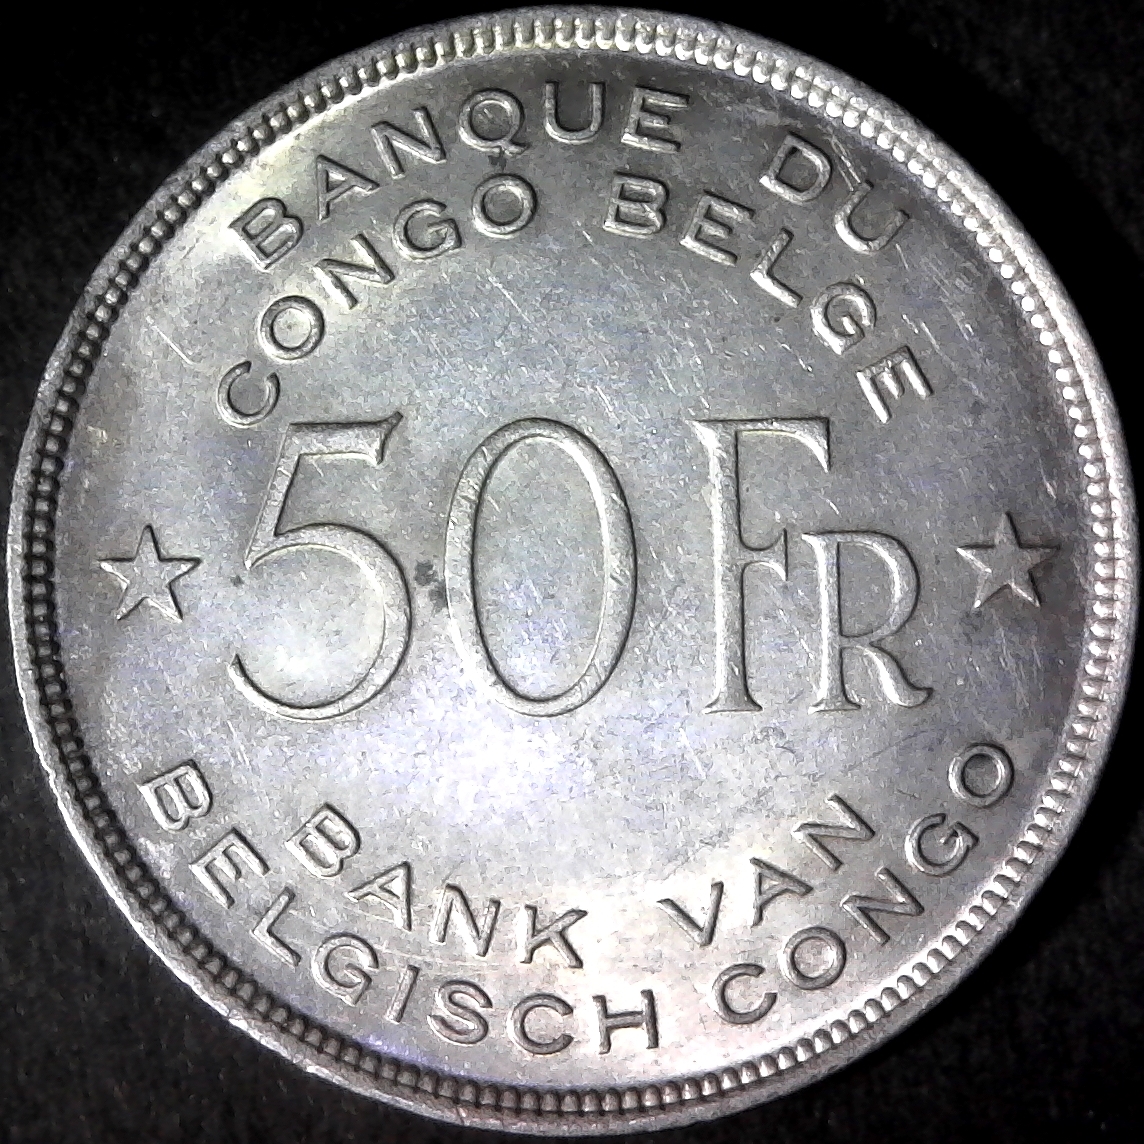 Congo 50 francs 1944 obv.jpg